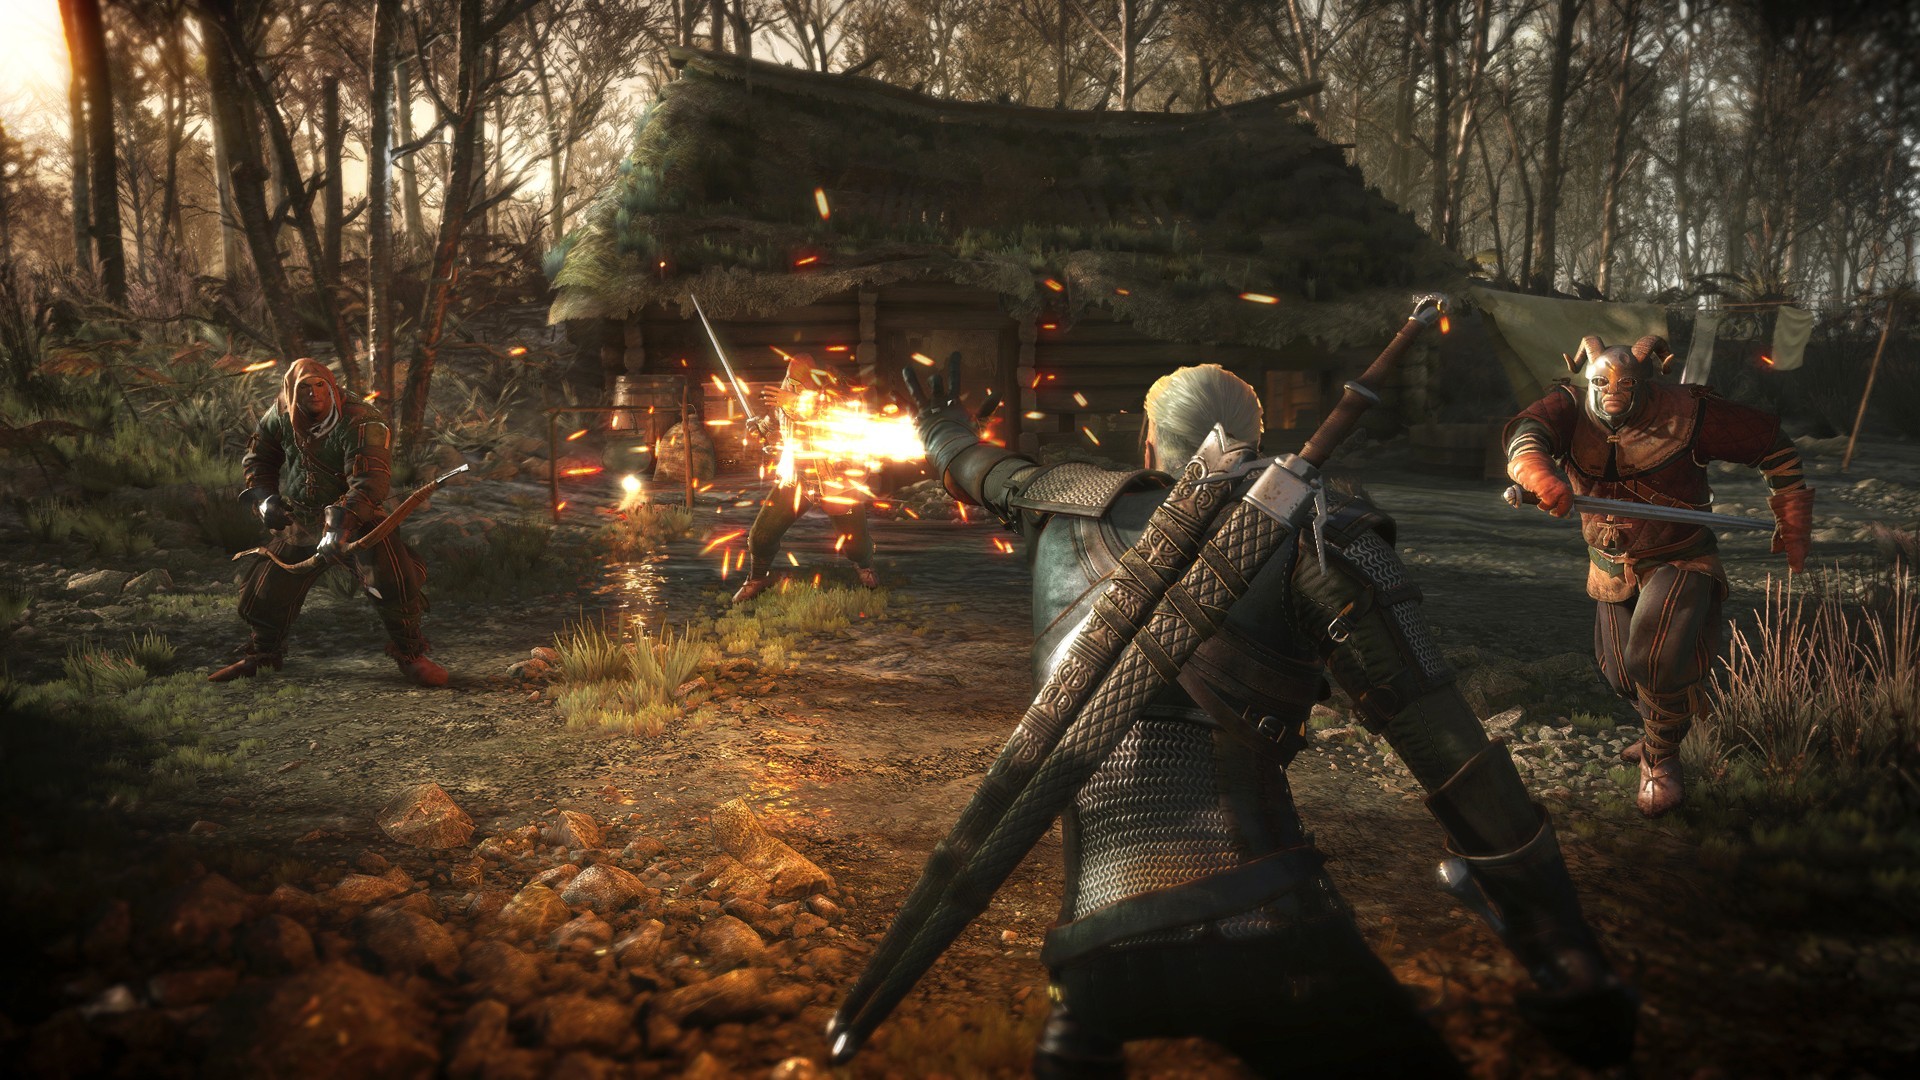 gamescom 2014: The Witcher 3 - Wild Hunt